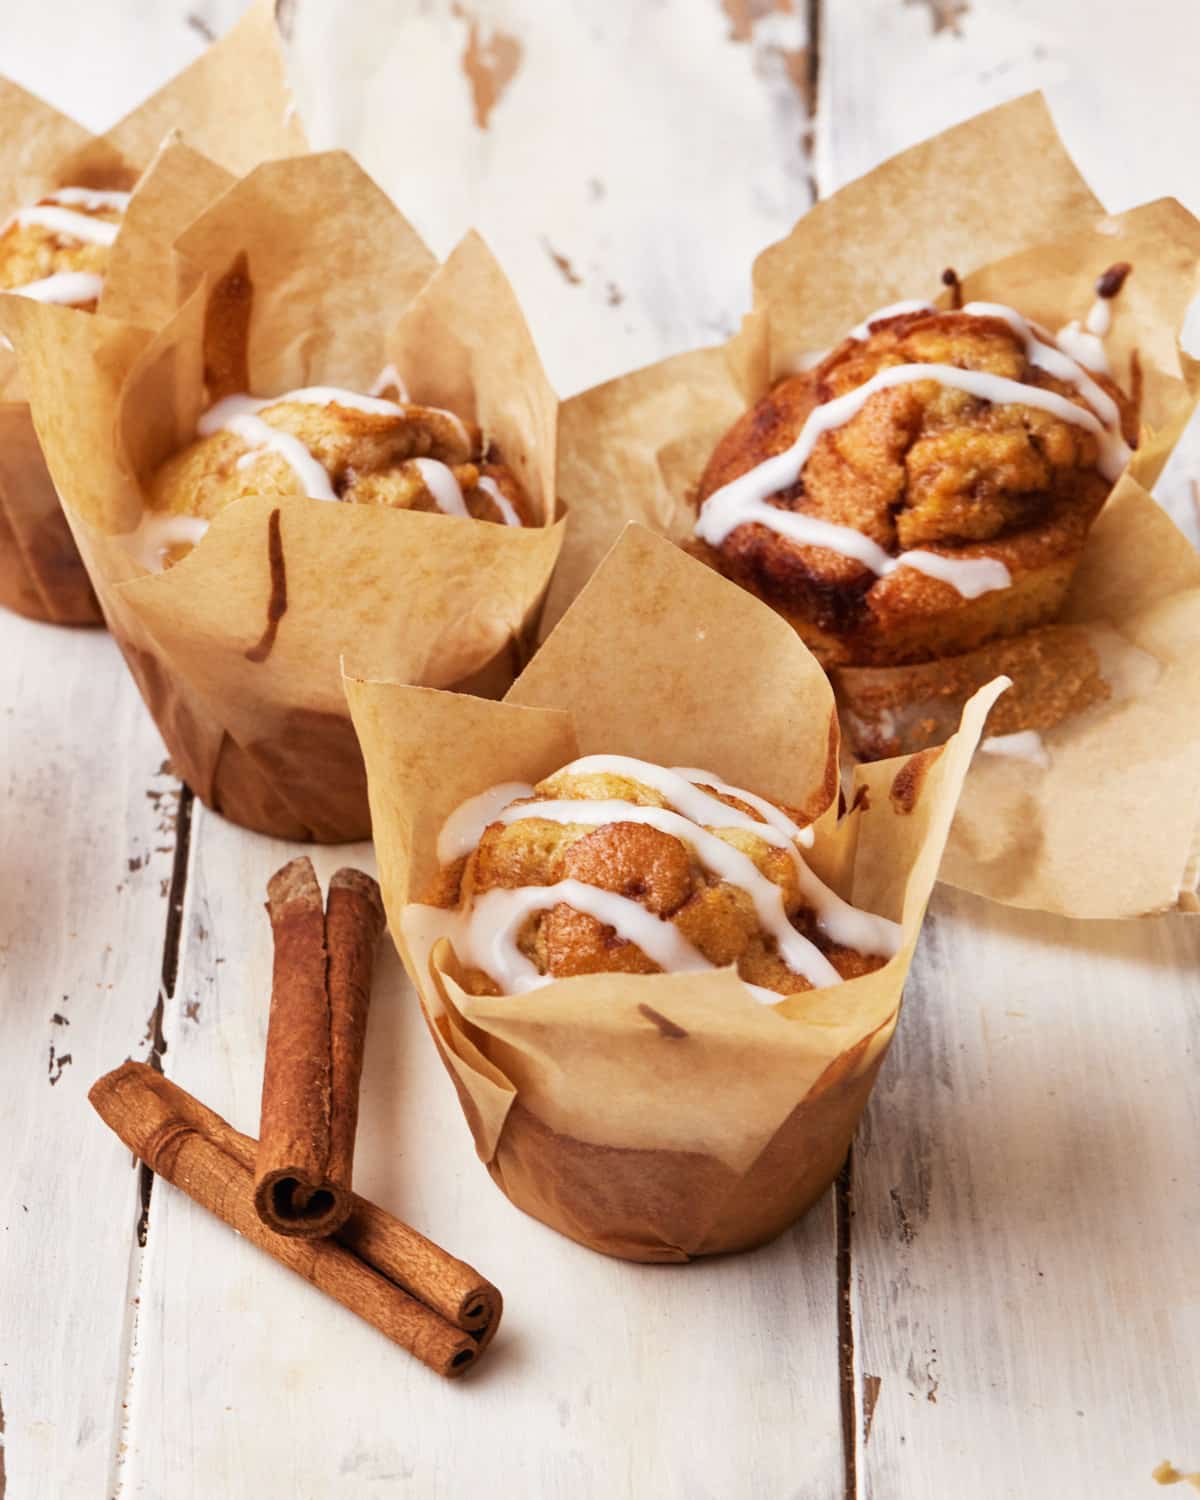 Cinnamon roll muffins with cream cheese glaze.